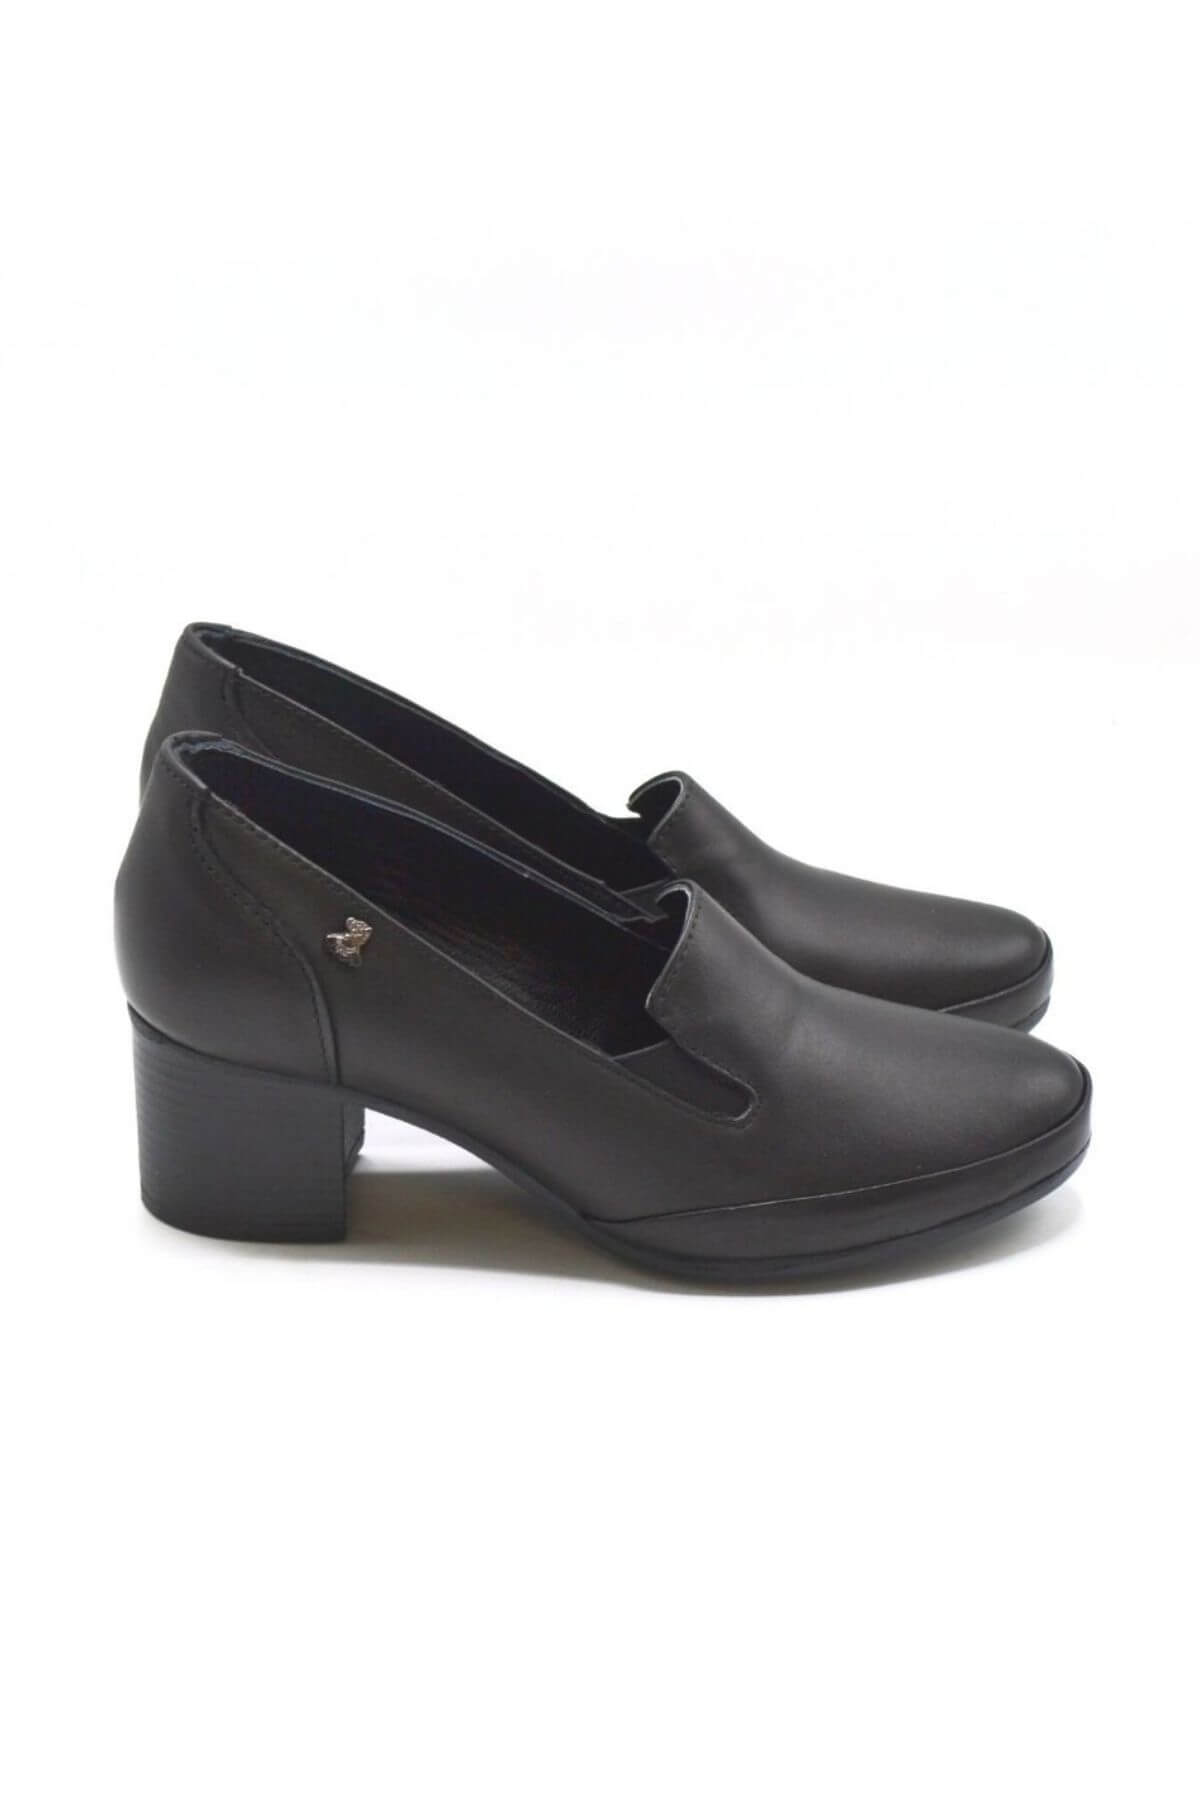 Kadın Topuklu Deri Ayakkabı Siyah 1911902K - Thumbnail